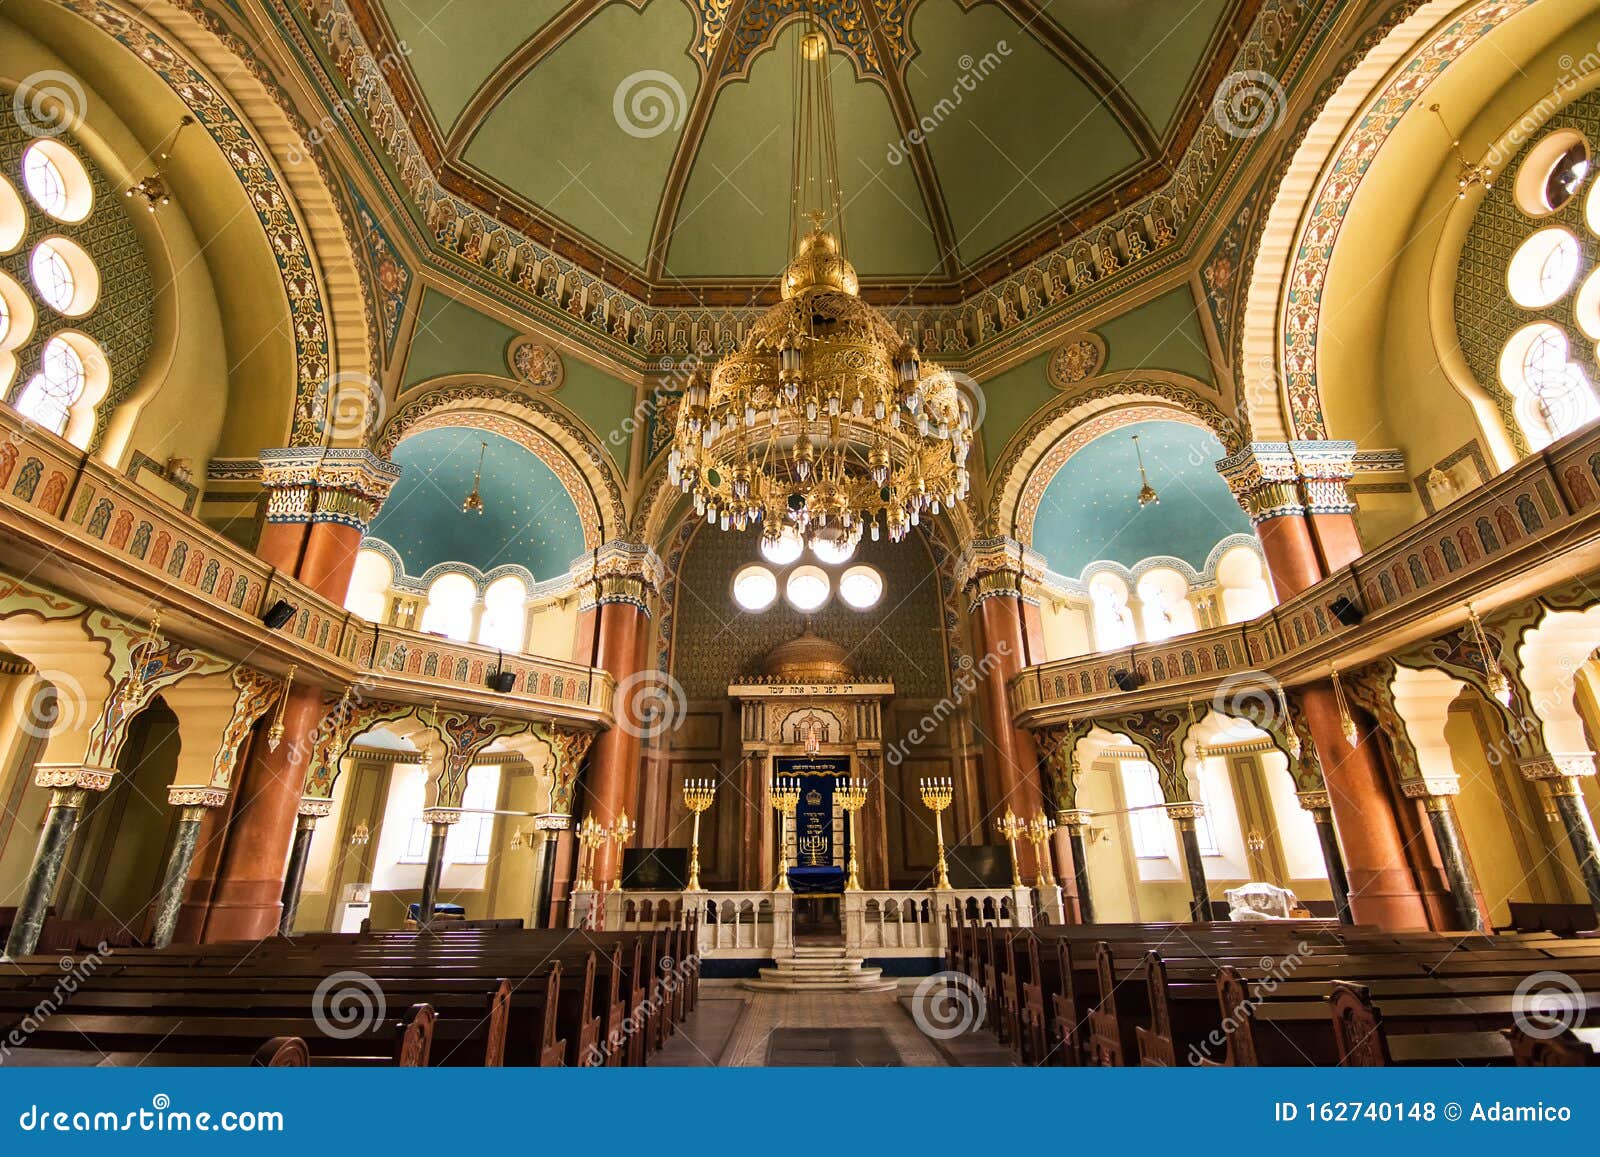 interior of the jewish synagogue in sofia bulgaria